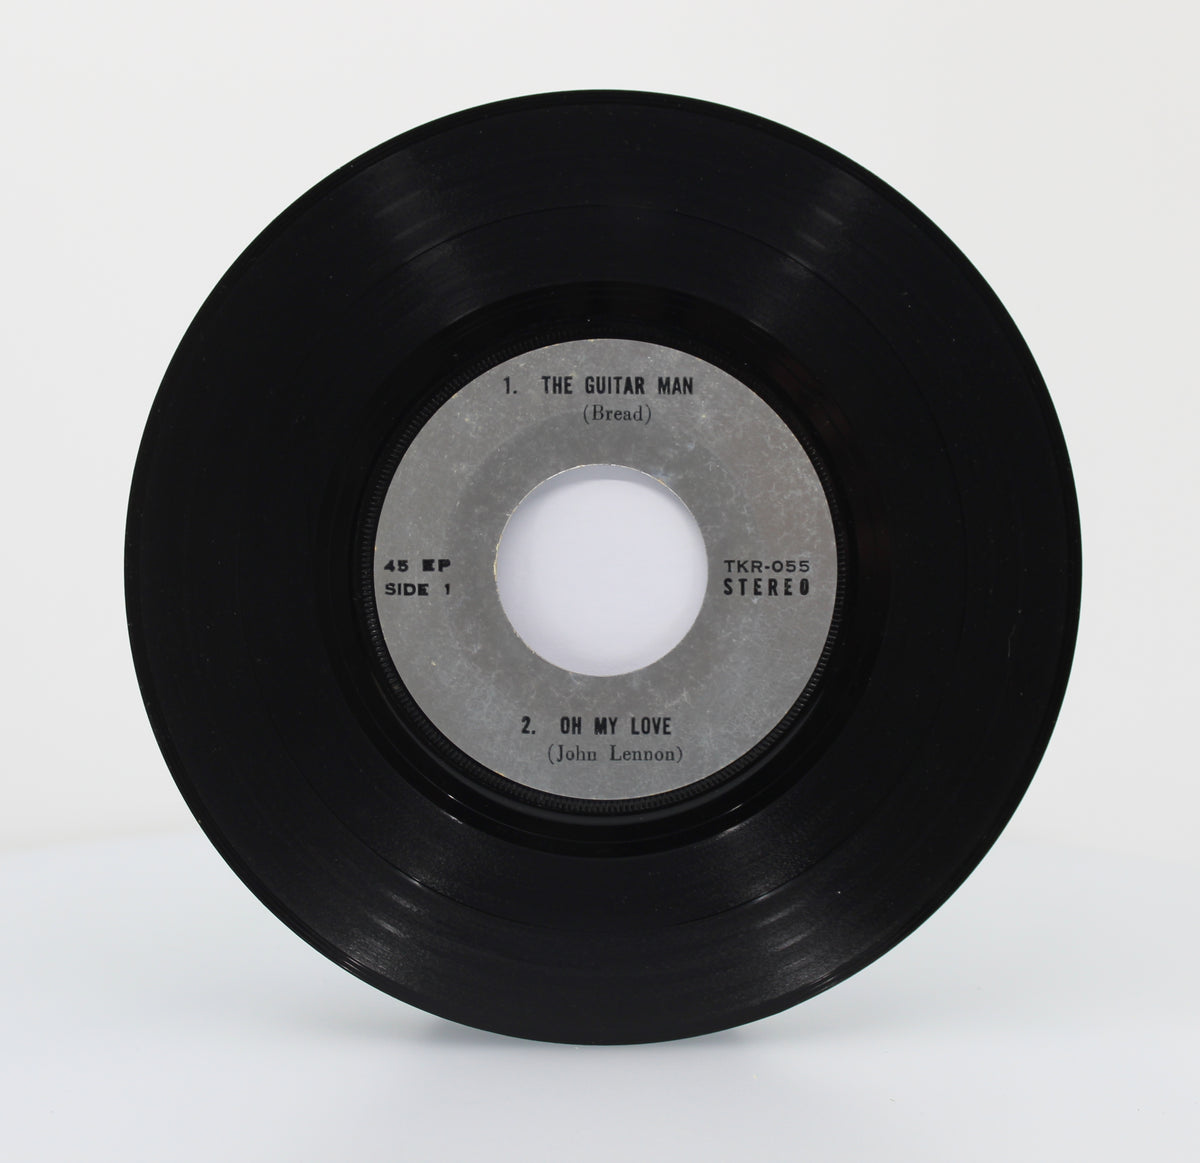 Bee Gees - Run To Me, Vinyl EP 45rpm, Thailand